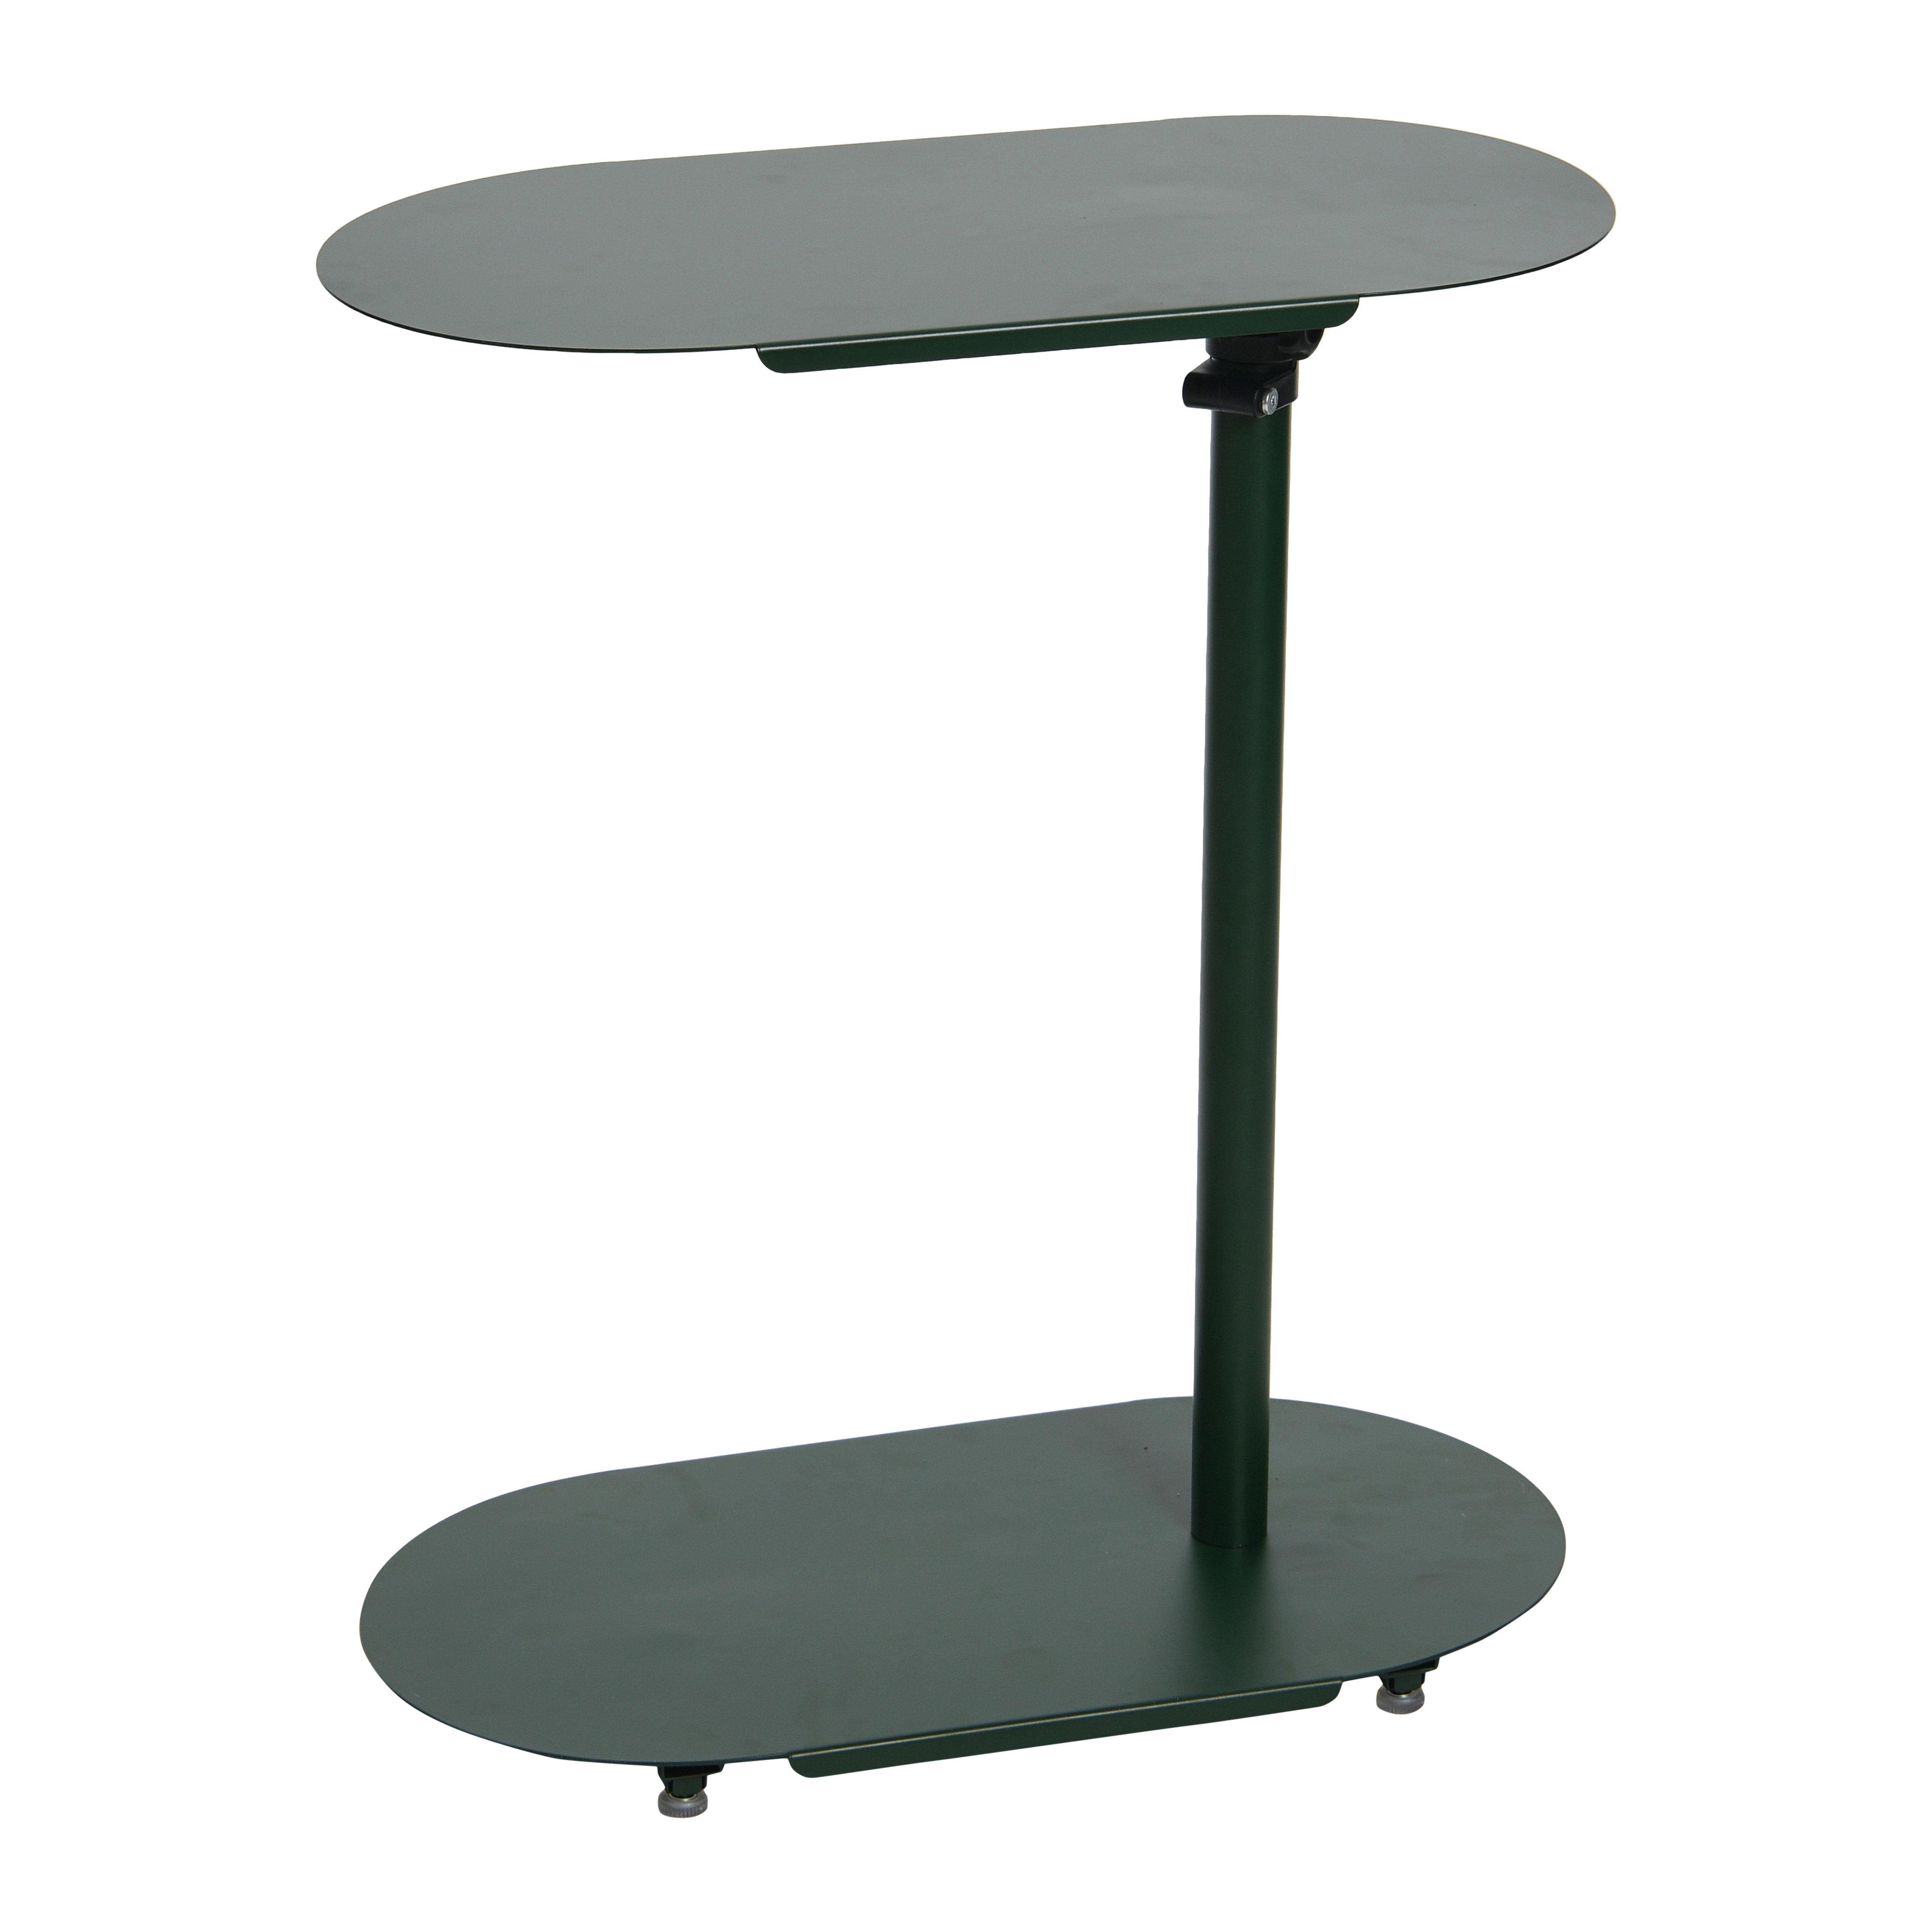 Main + Mesa Modern Adjustable C-Table, Dark Green - Image 0